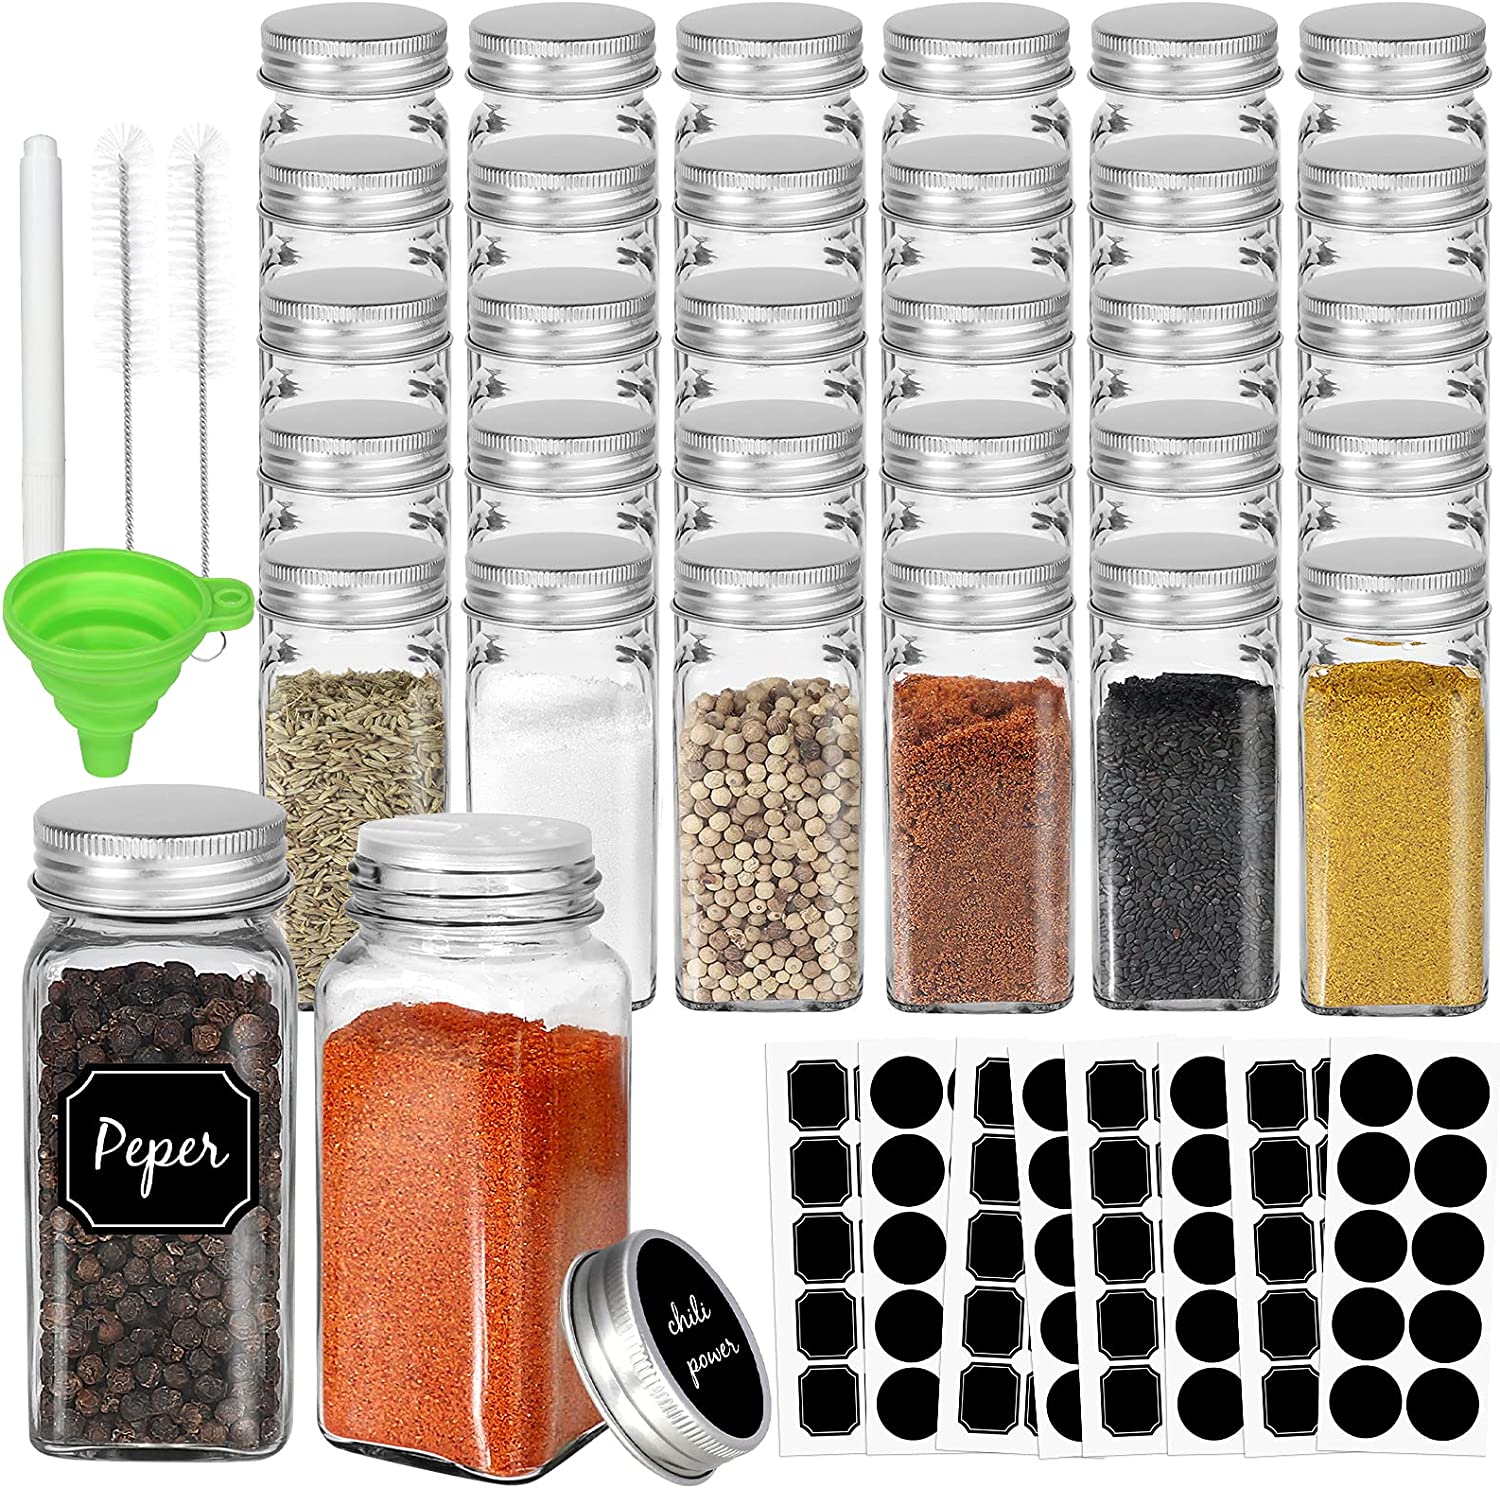 Spice Jars, SPANLA 24 Pack 4oz Small Glass Jars with Airtight